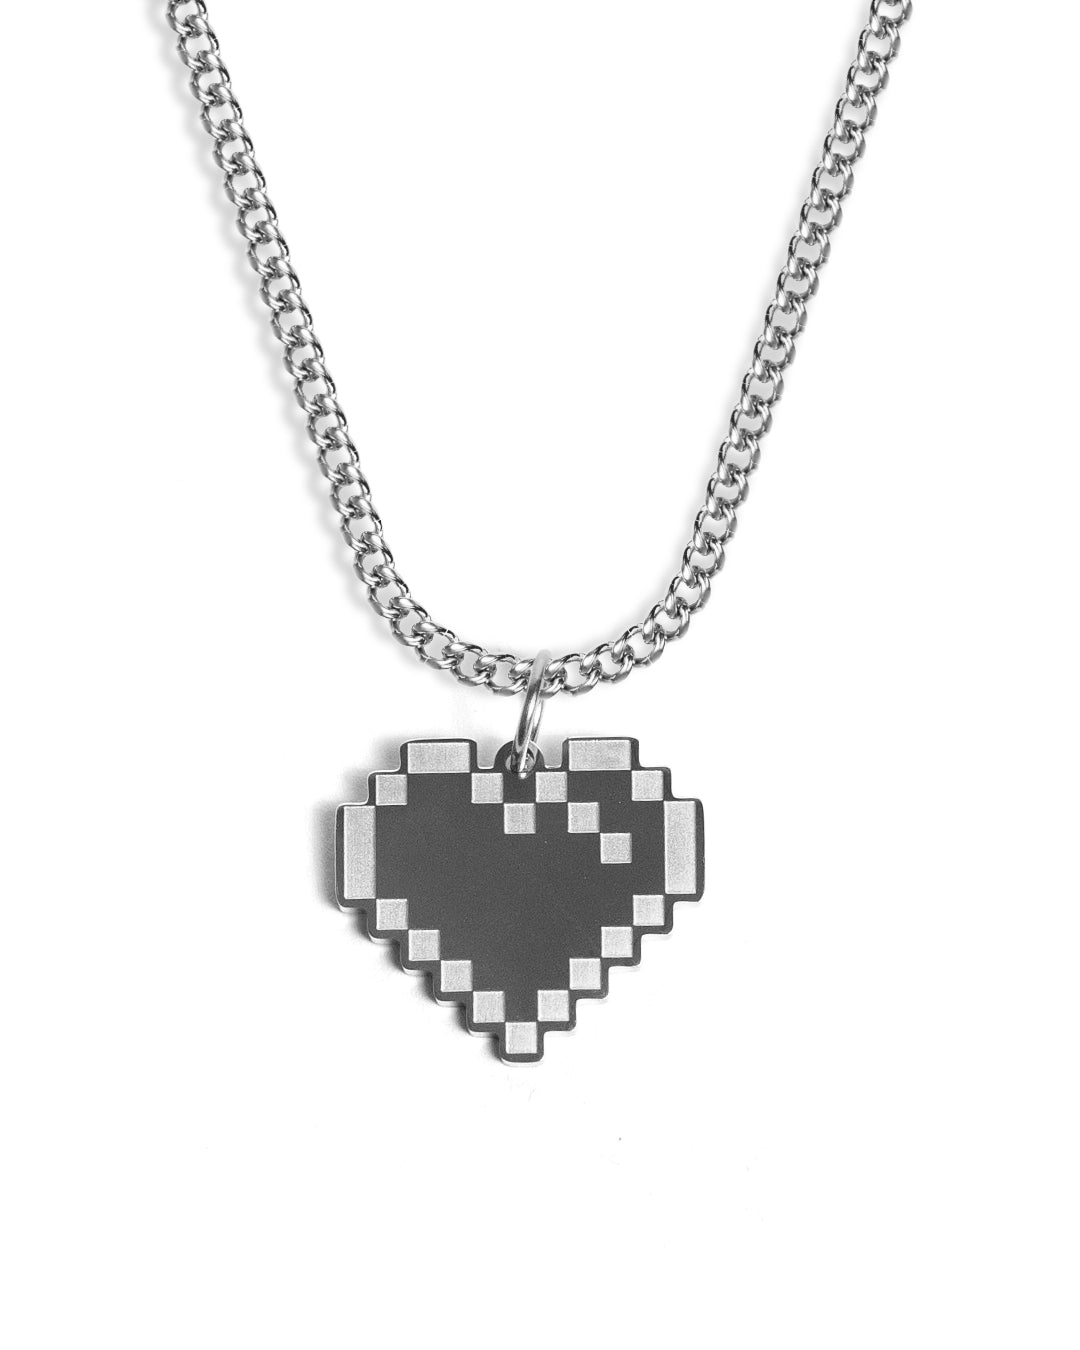 8bit love Necklace (Silver)